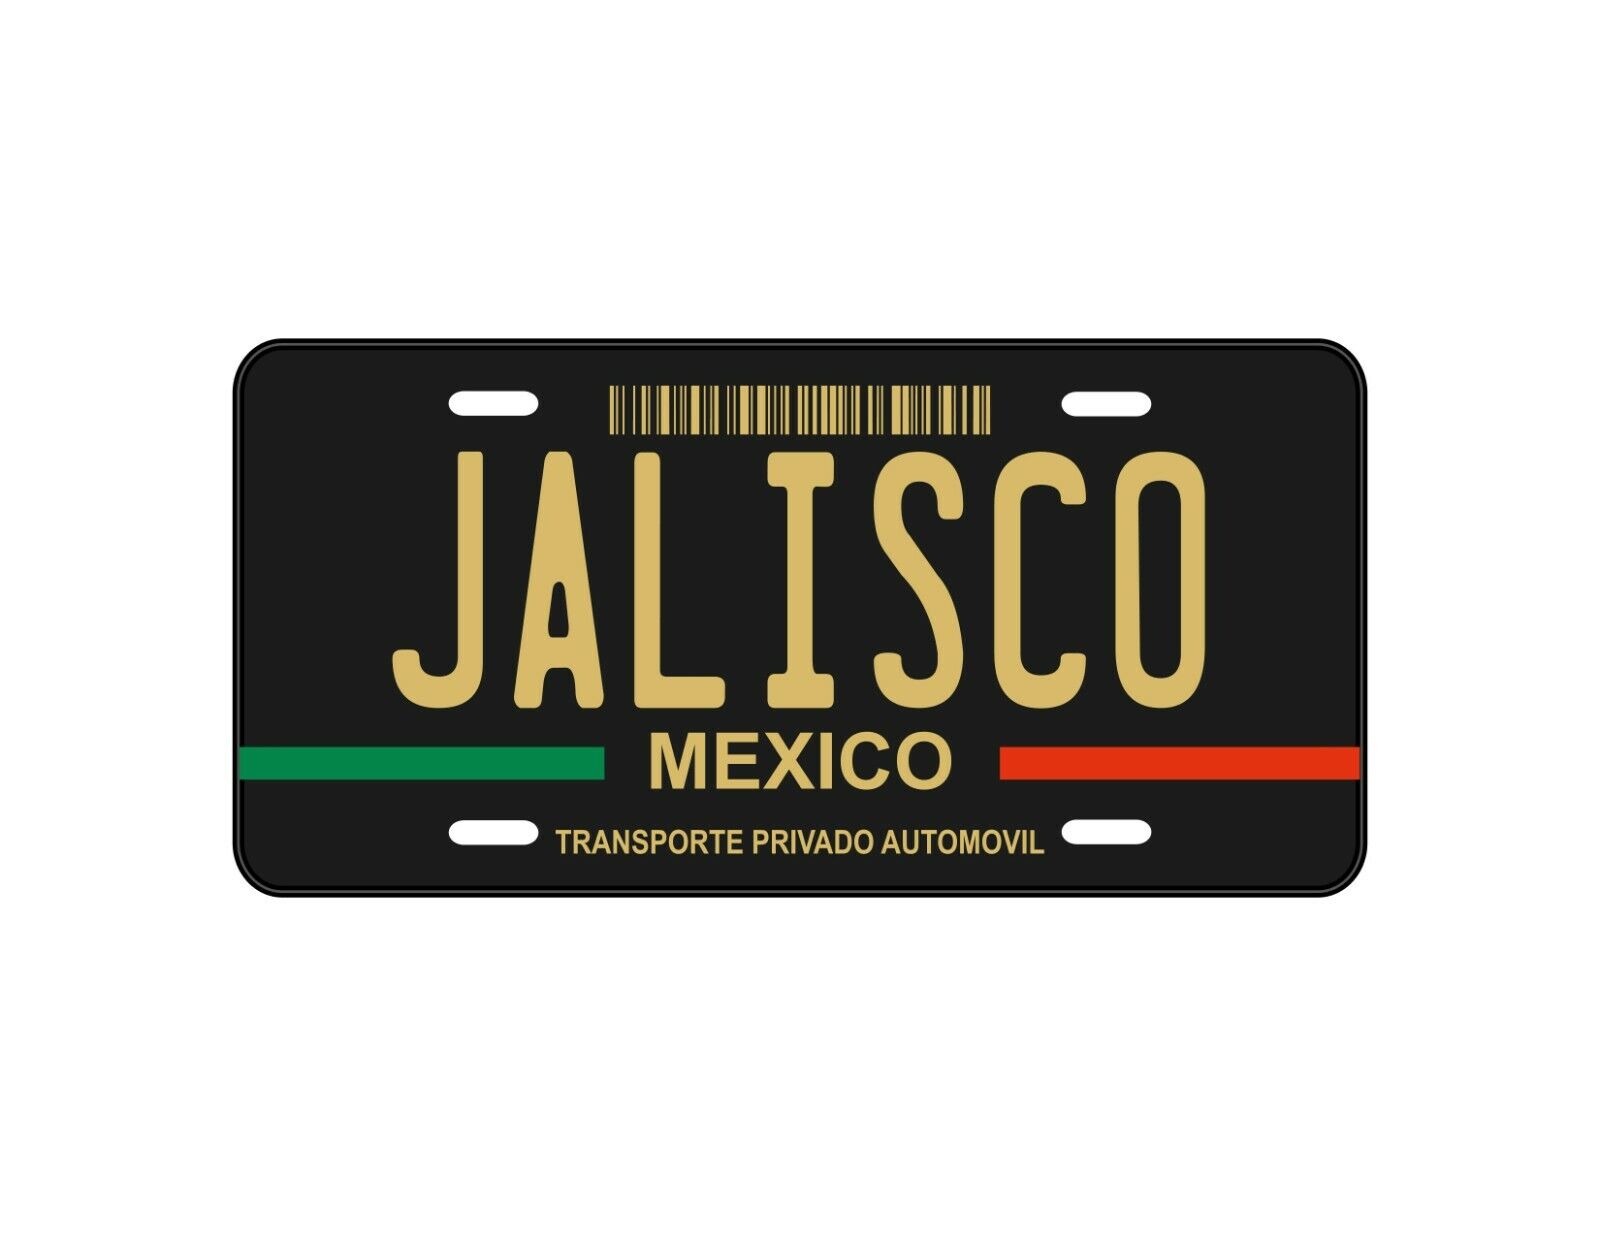 PLACA NEGRA DECORATIVA CARRO JALISCO / Car Plate Personalized JALISCO Black